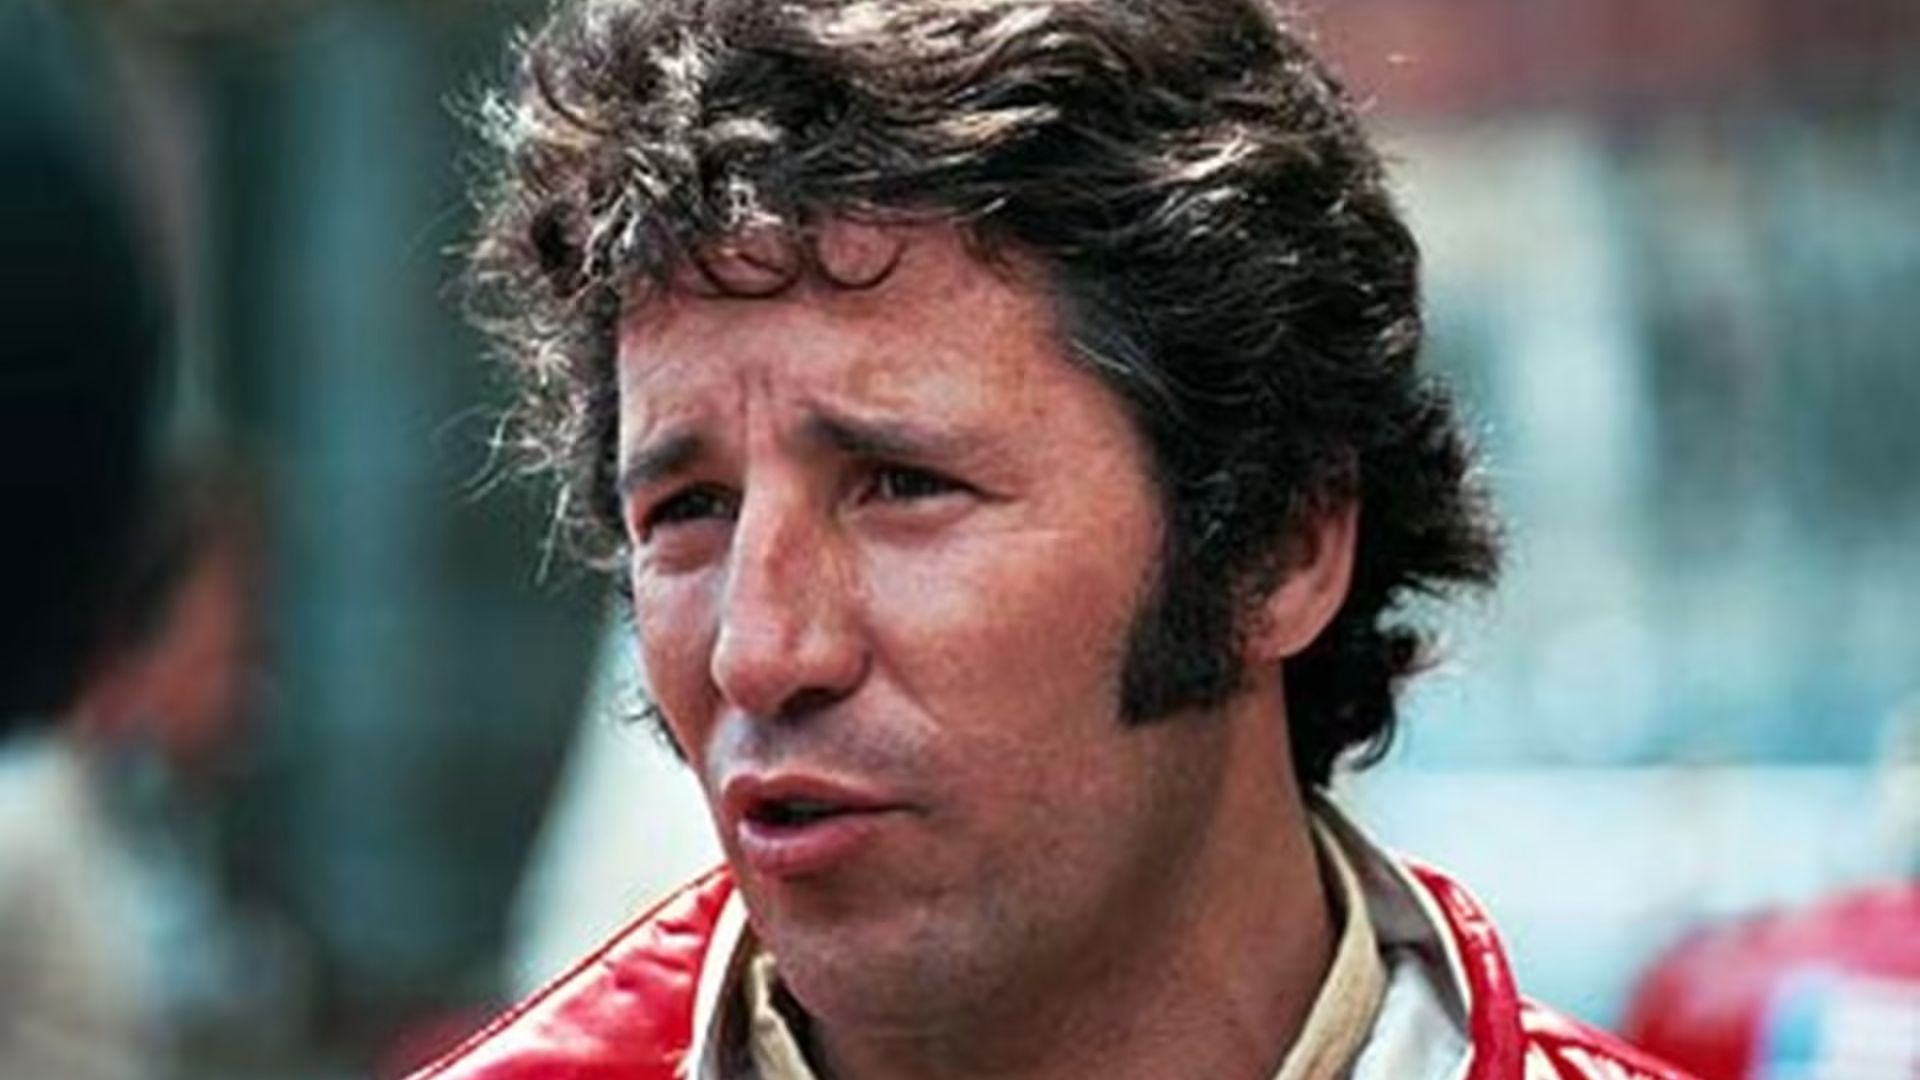 Mario Andretti Face Closeup